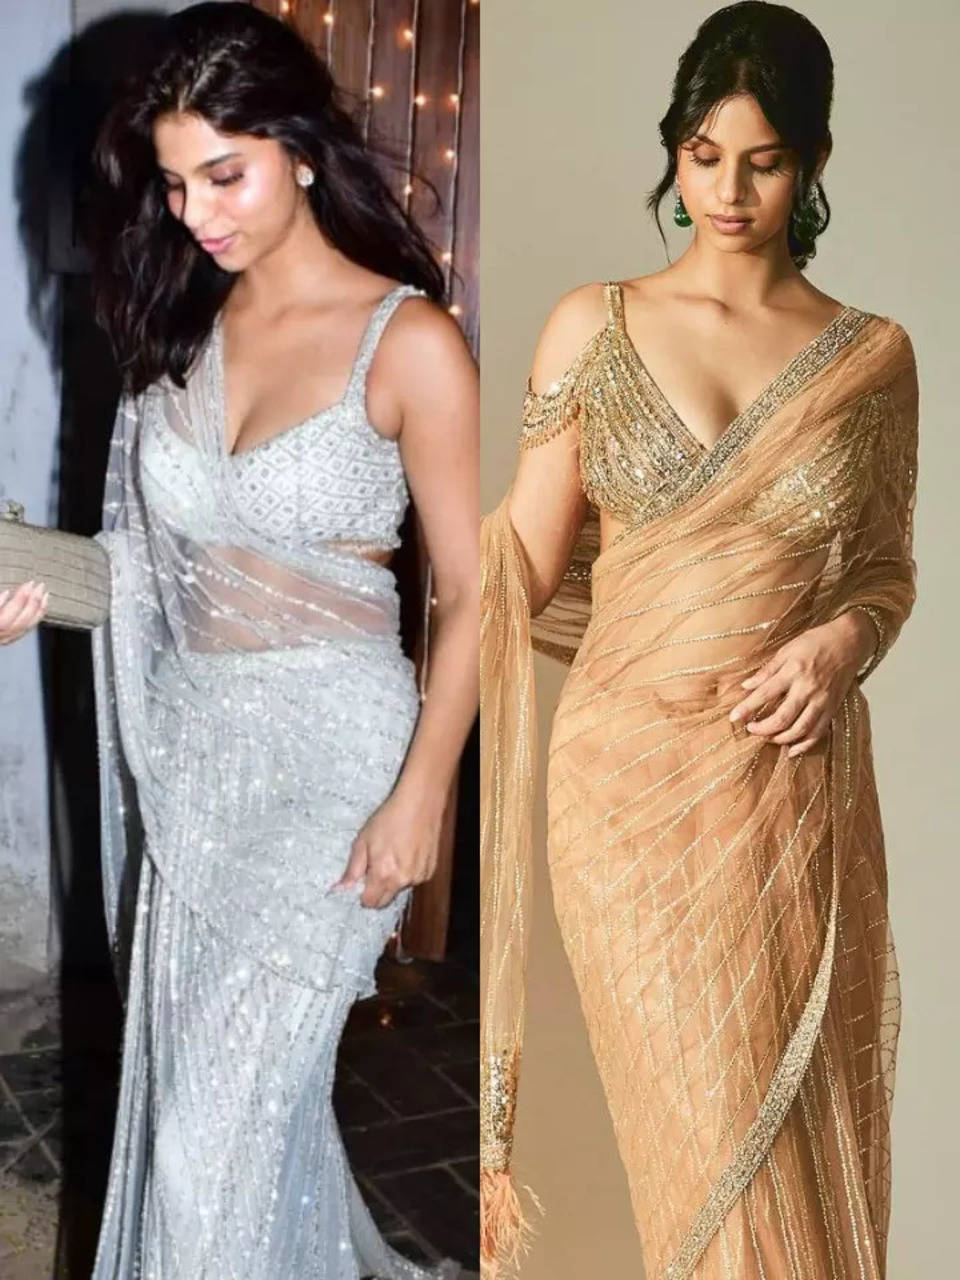 Suhana Khan's sensational sheer sari looks